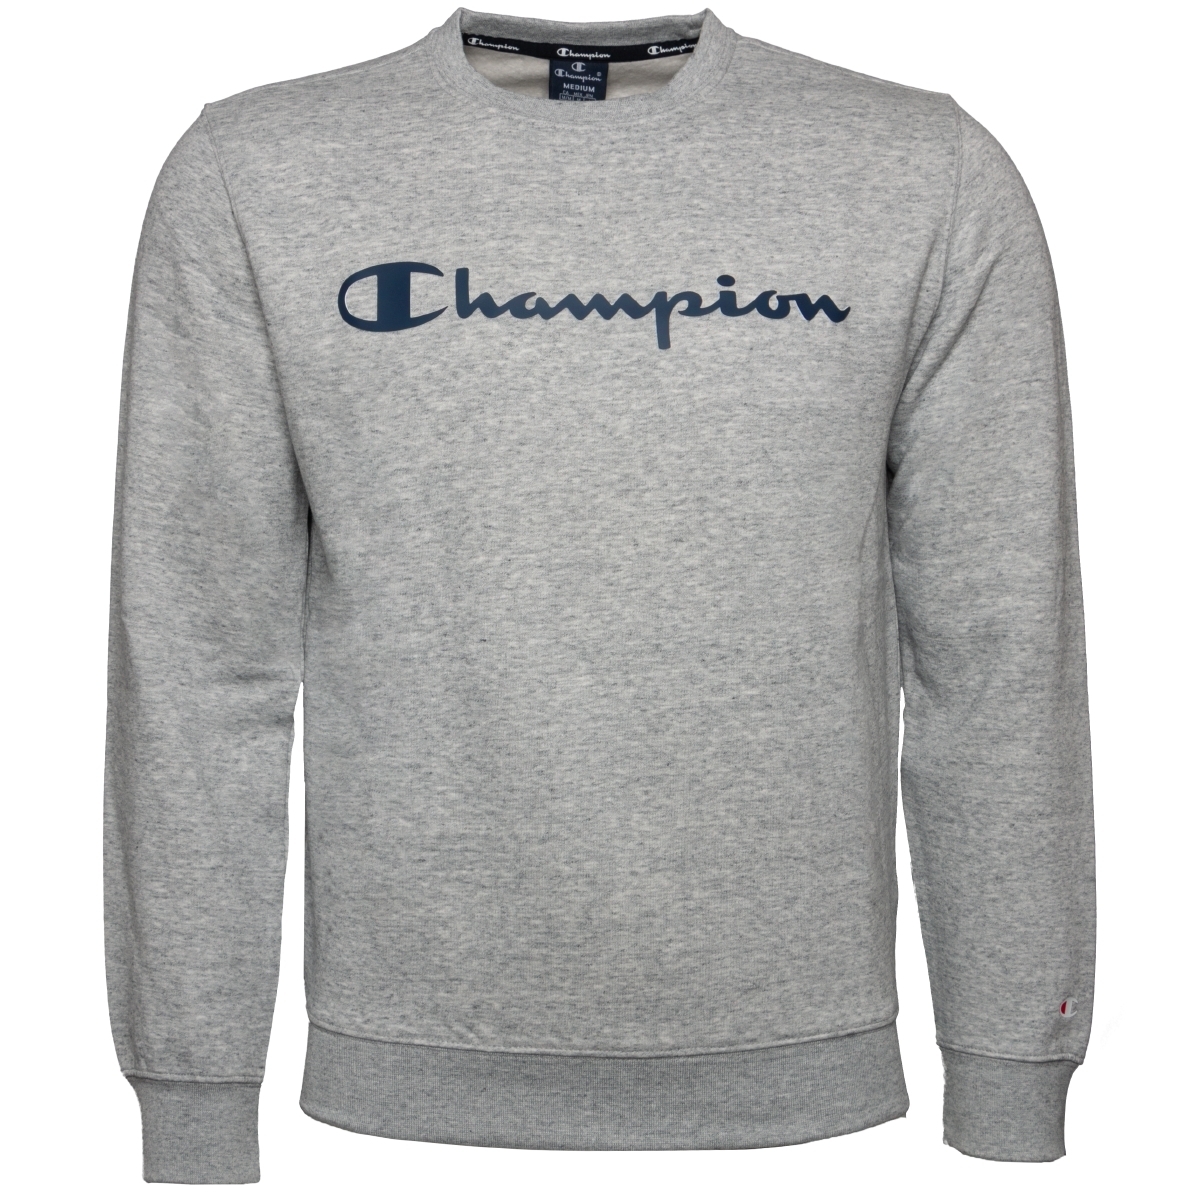 Champion Crewneck Sweatshirt grau